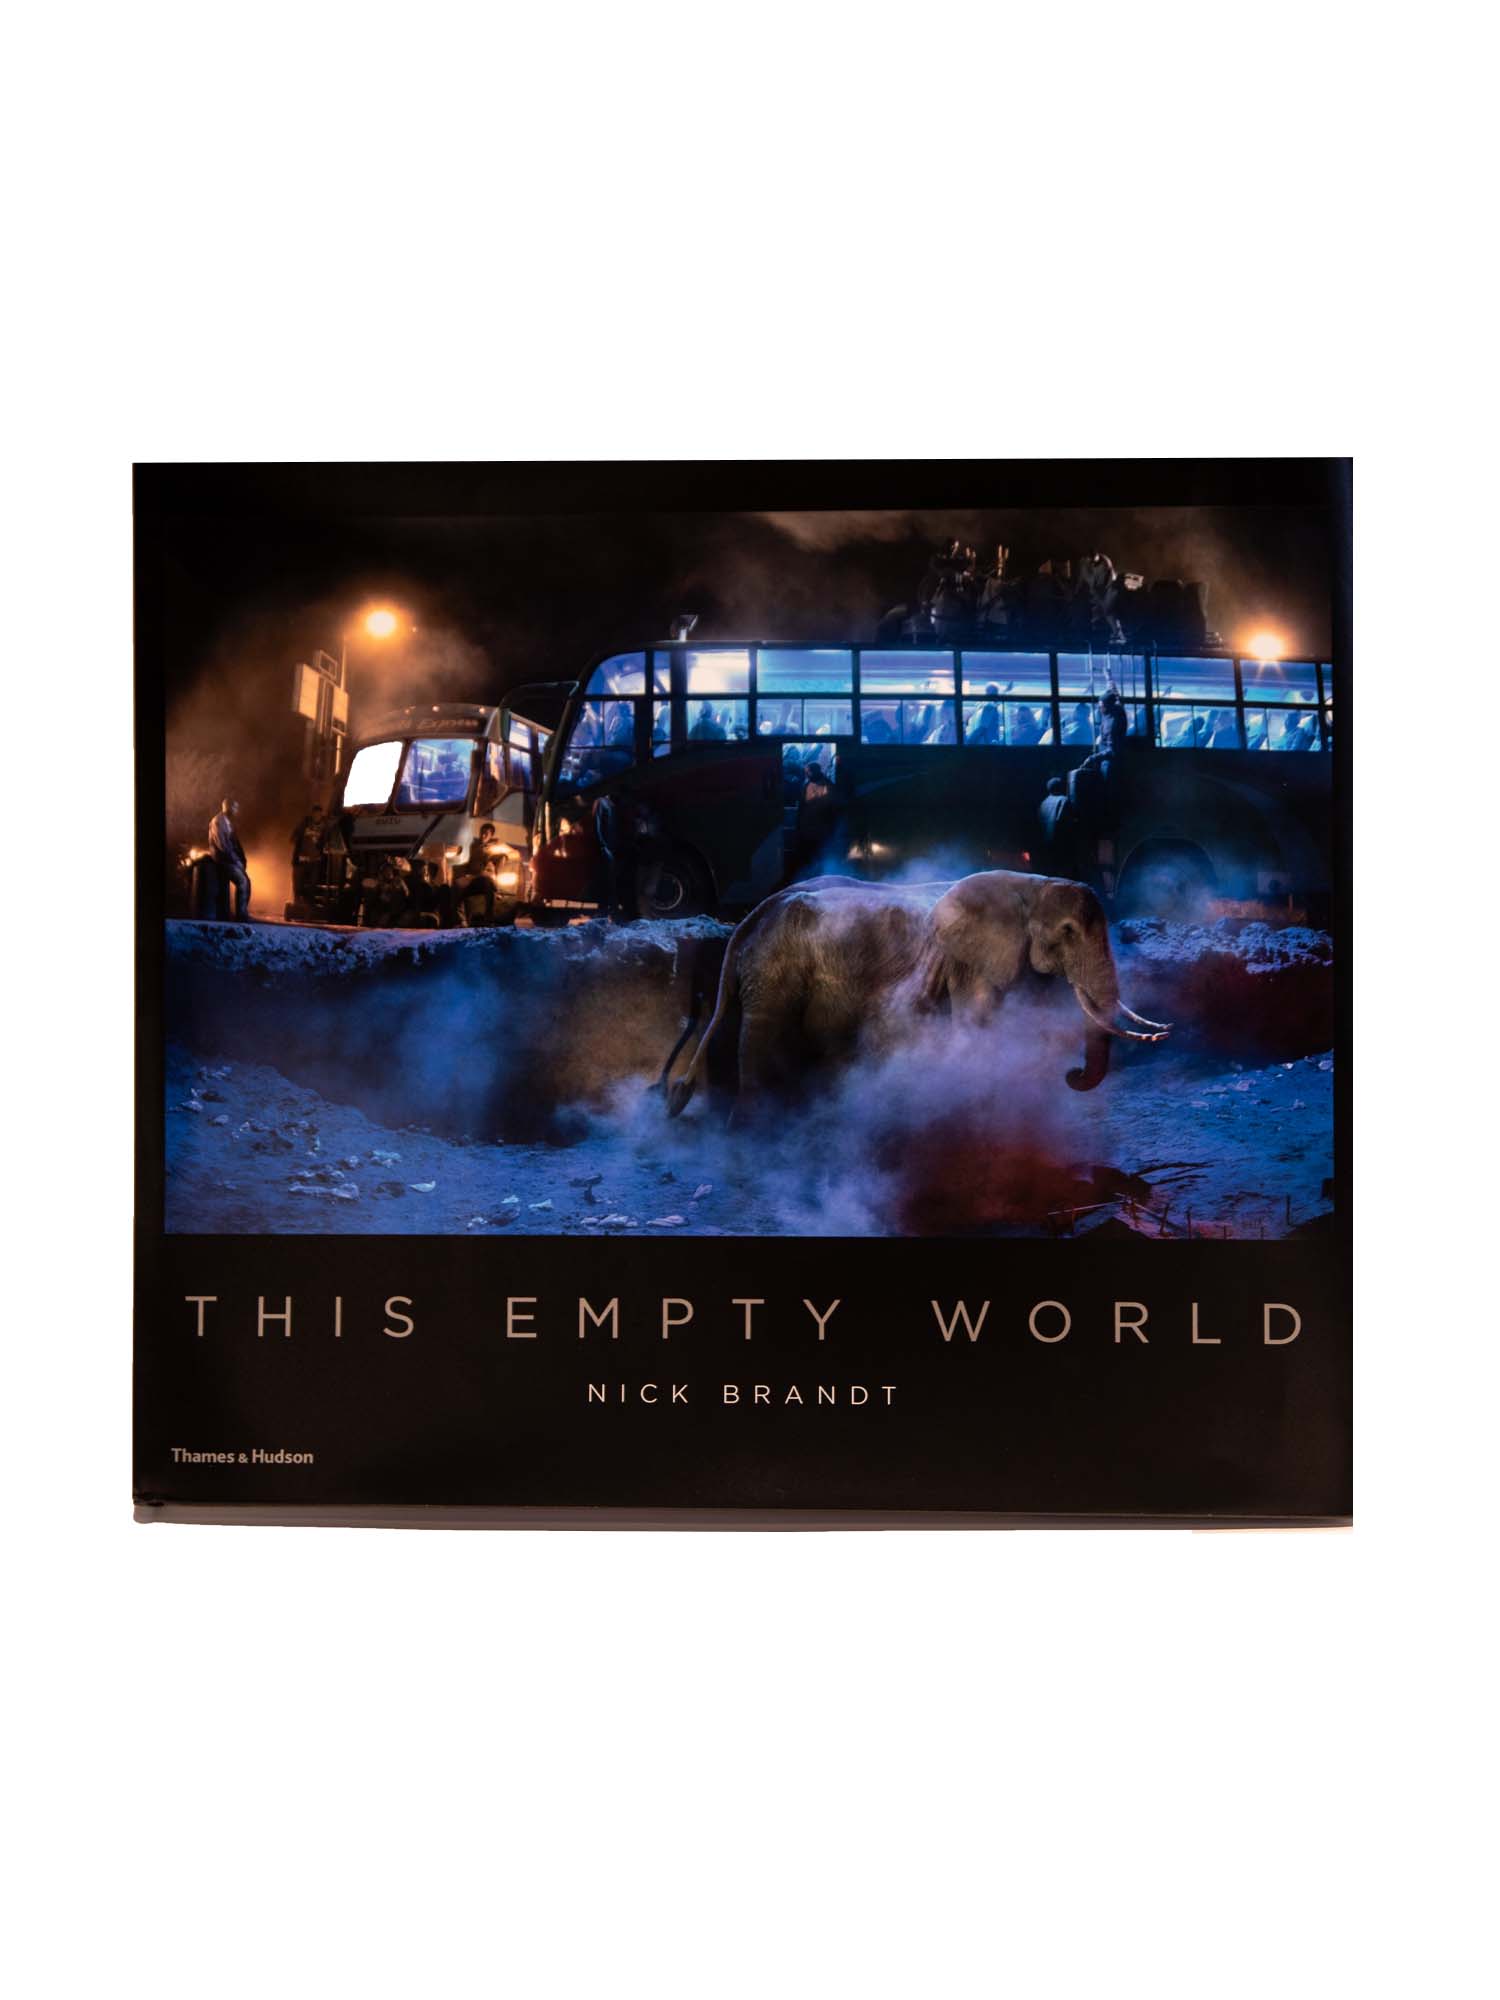 This empty world - Nick Brandt